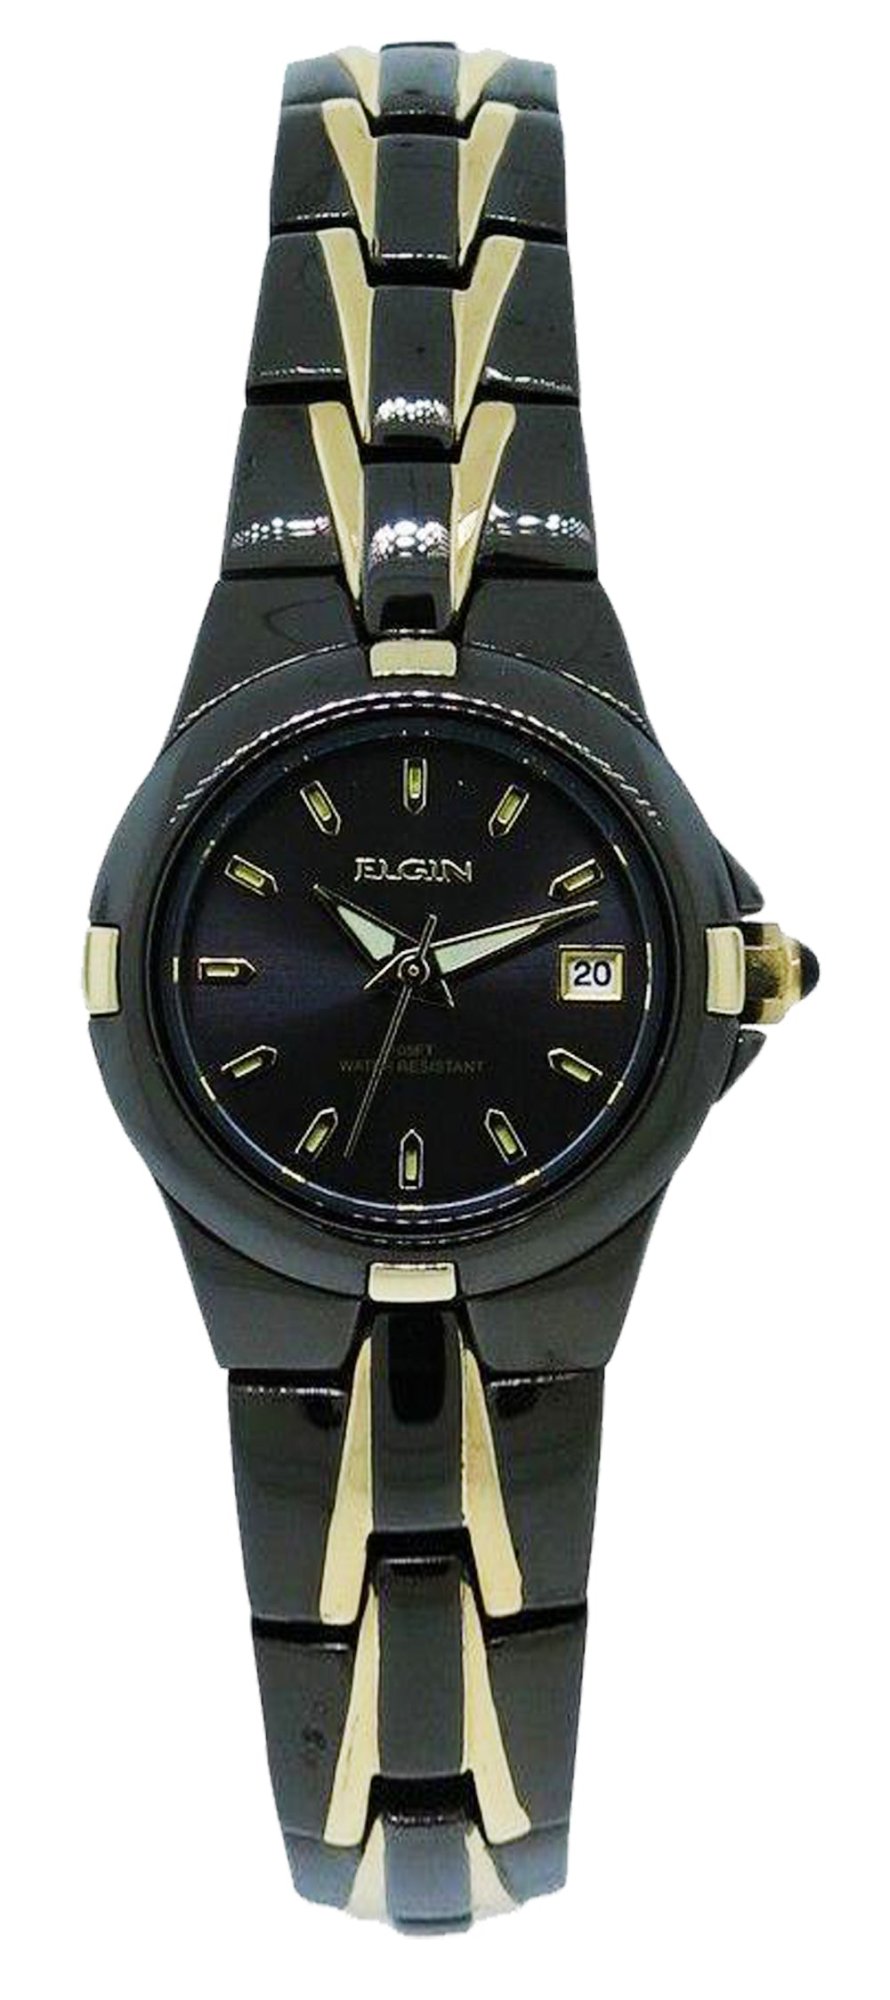 Model: Women's Elgin Round Black Analog Watch with Date Two Tone Bracelet